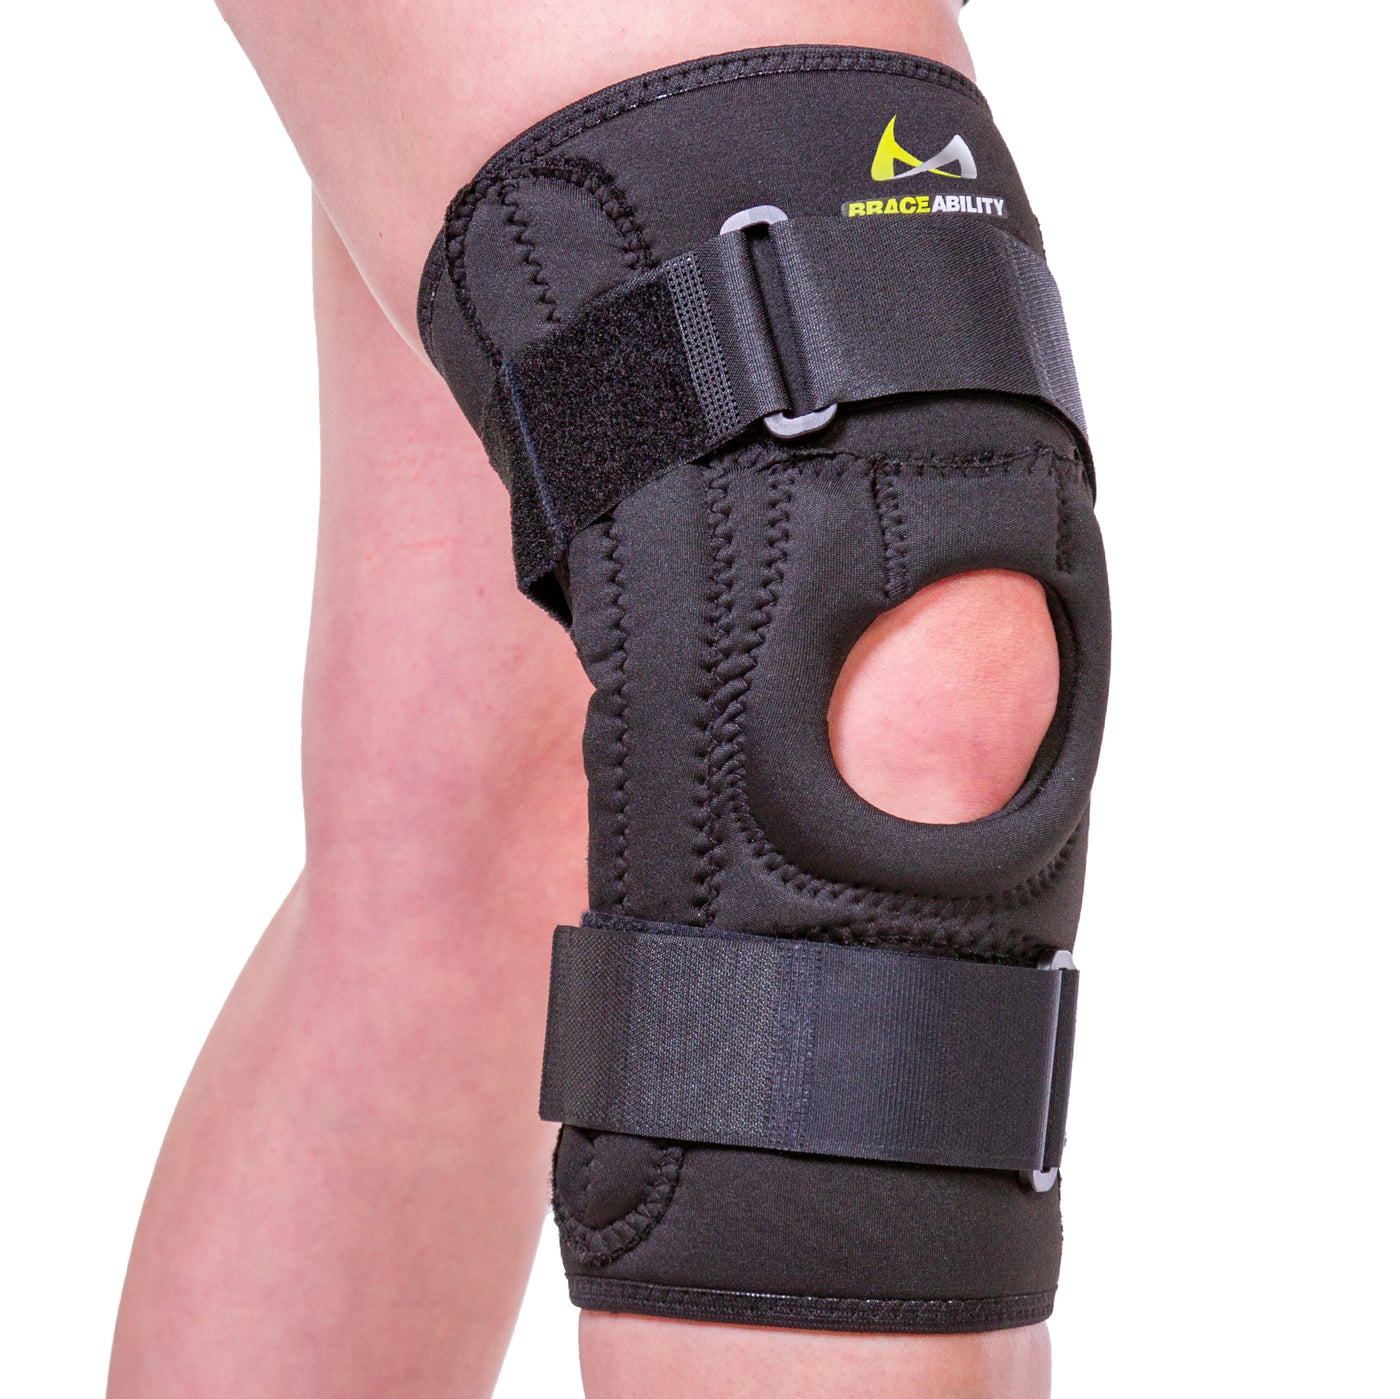 MKO Patella Stabilizer Knee Brace for Patella Tendonitis